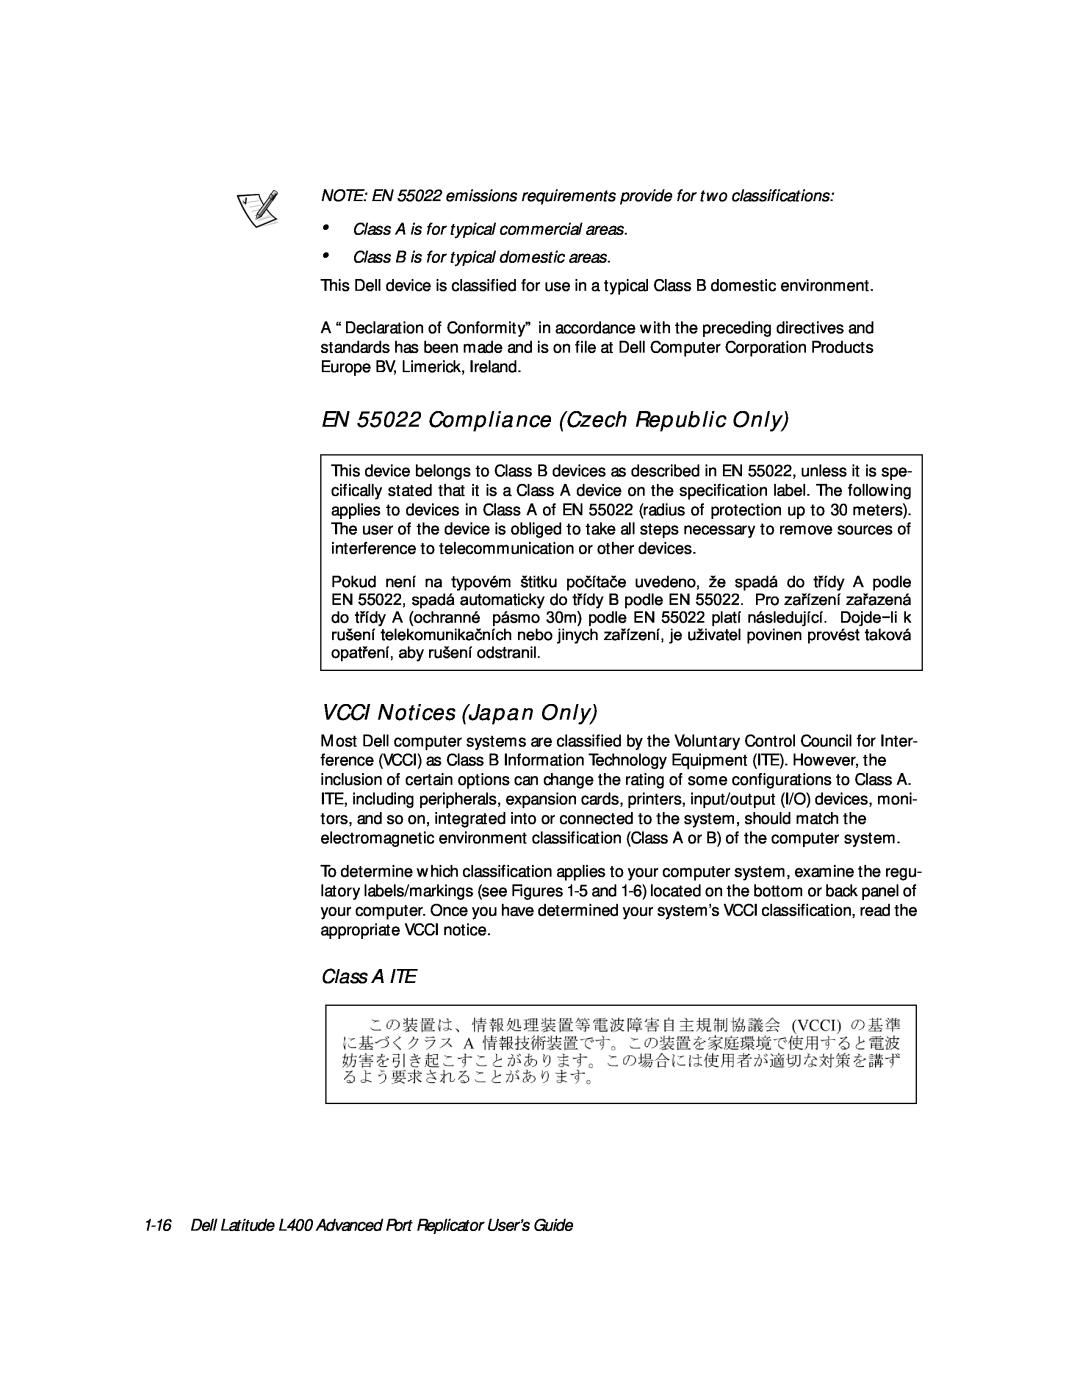 Dell L400 manual EN 55022 Compliance Czech Republic Only, VCCI Notices Japan Only, Class A ITE 